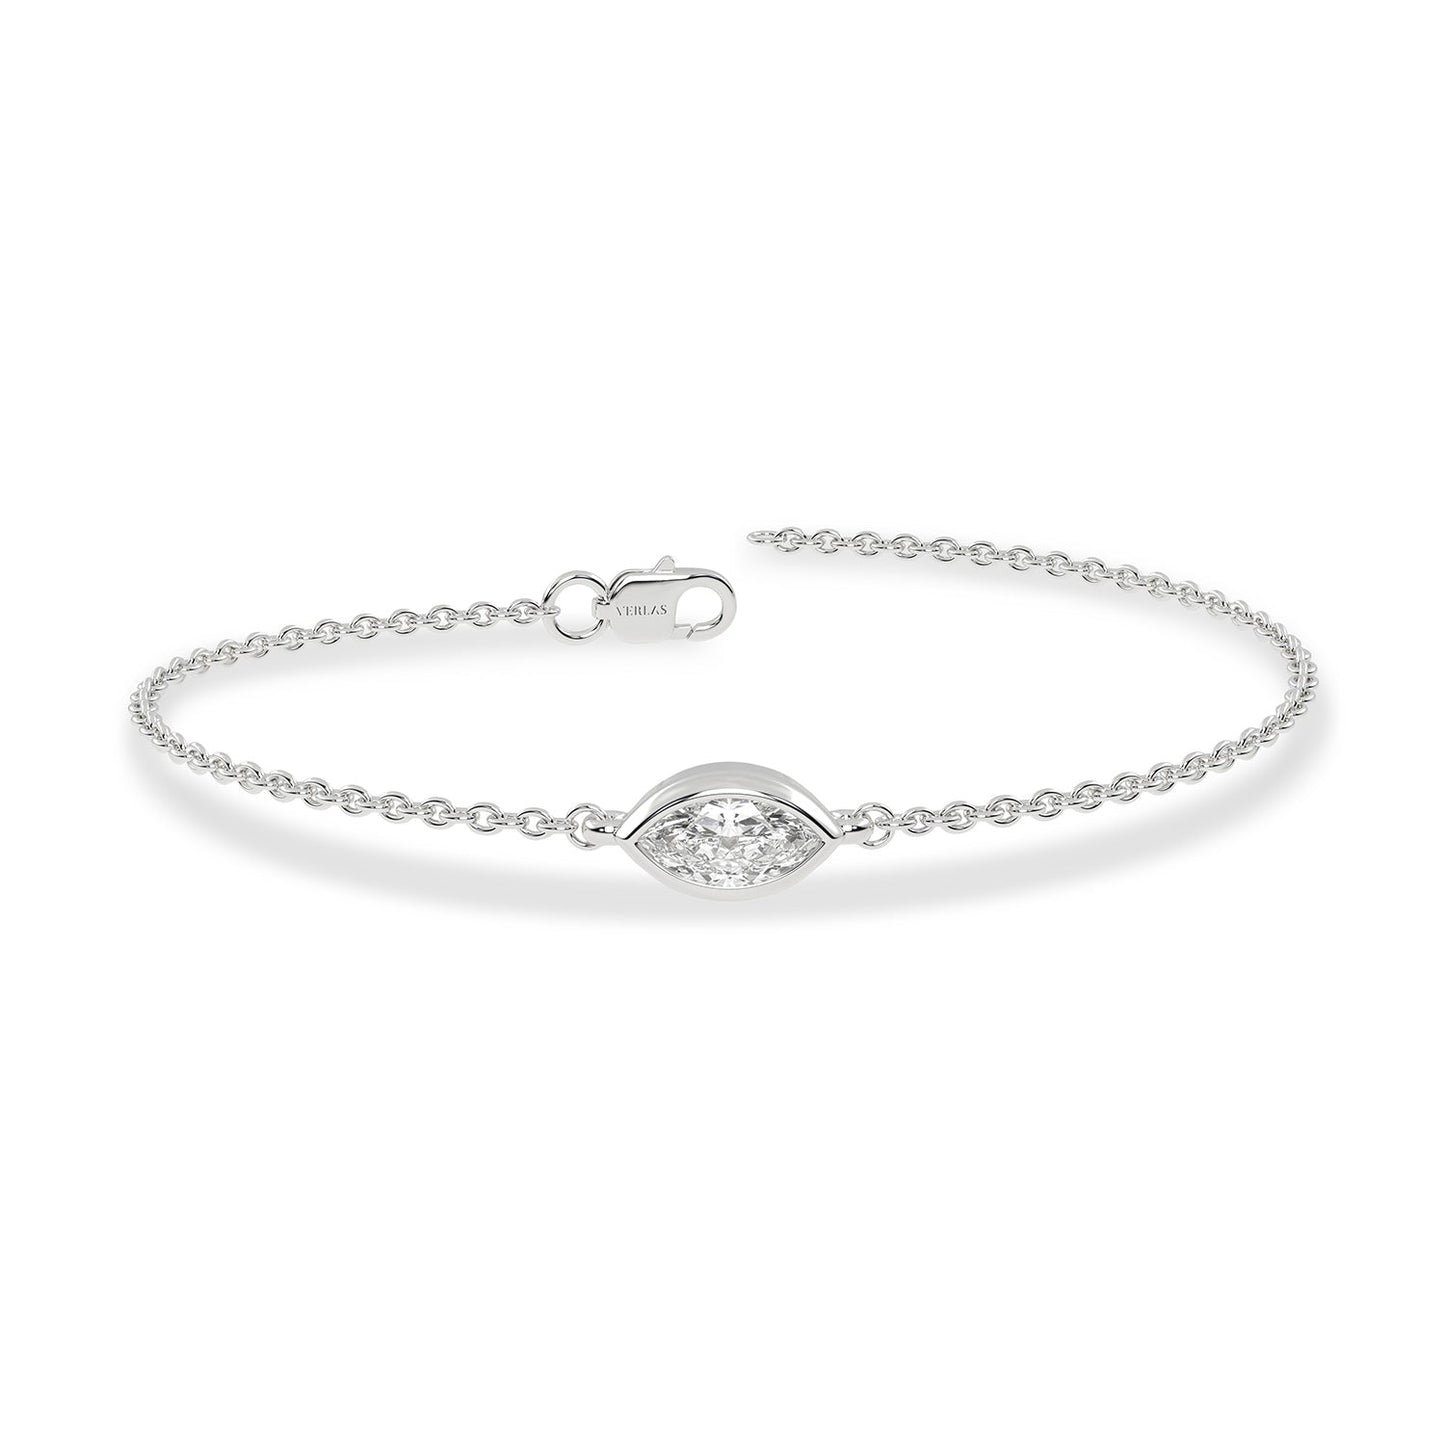 Marquise Diamond Glitter Bracelet_Product angle_1/5 Ct. - 2